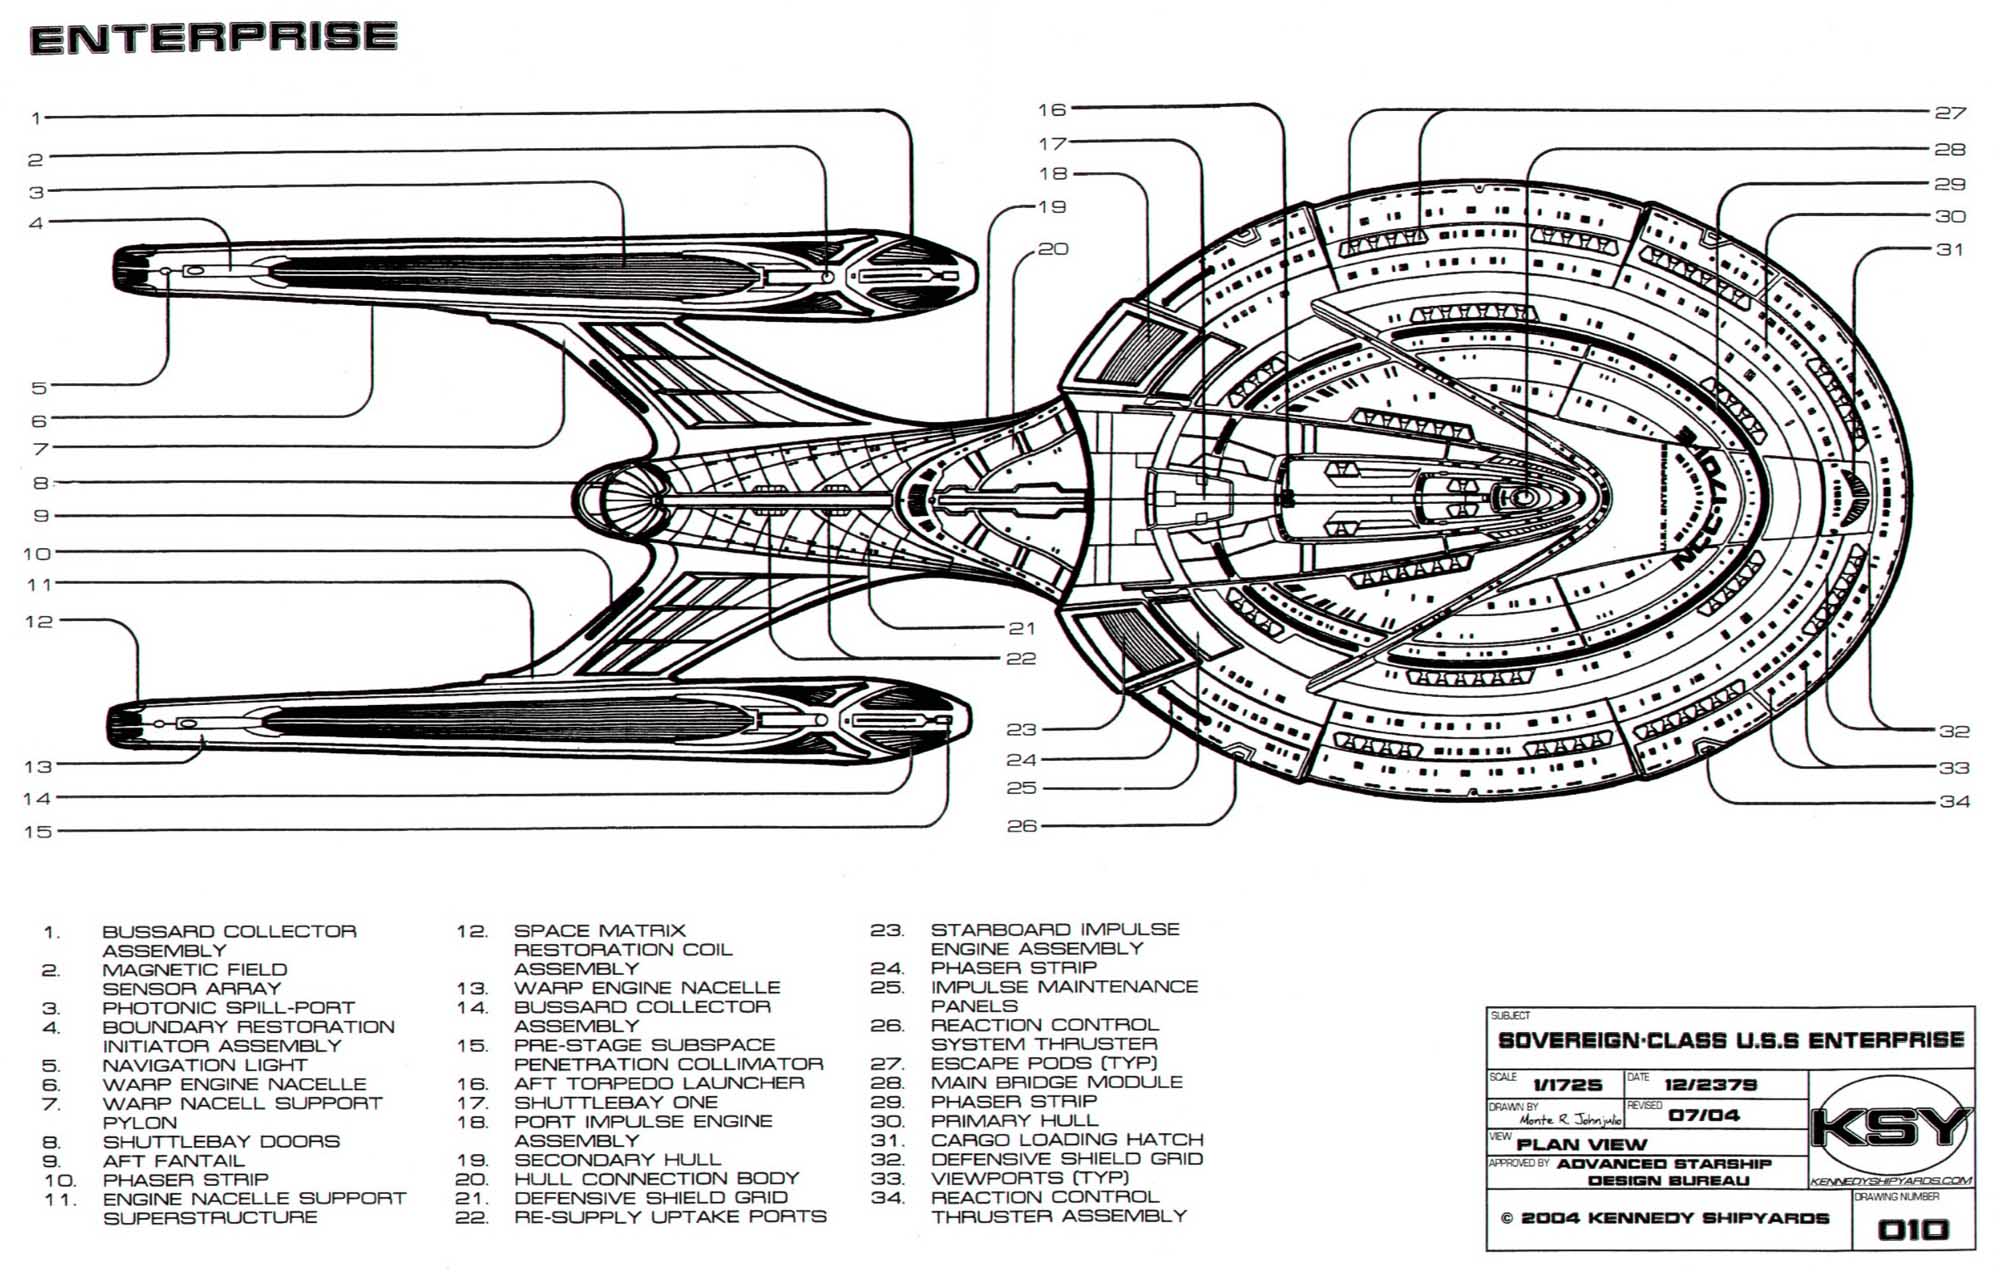 Star Trek Blueprints: Sovereign Class Federation Starship U.S.S ...